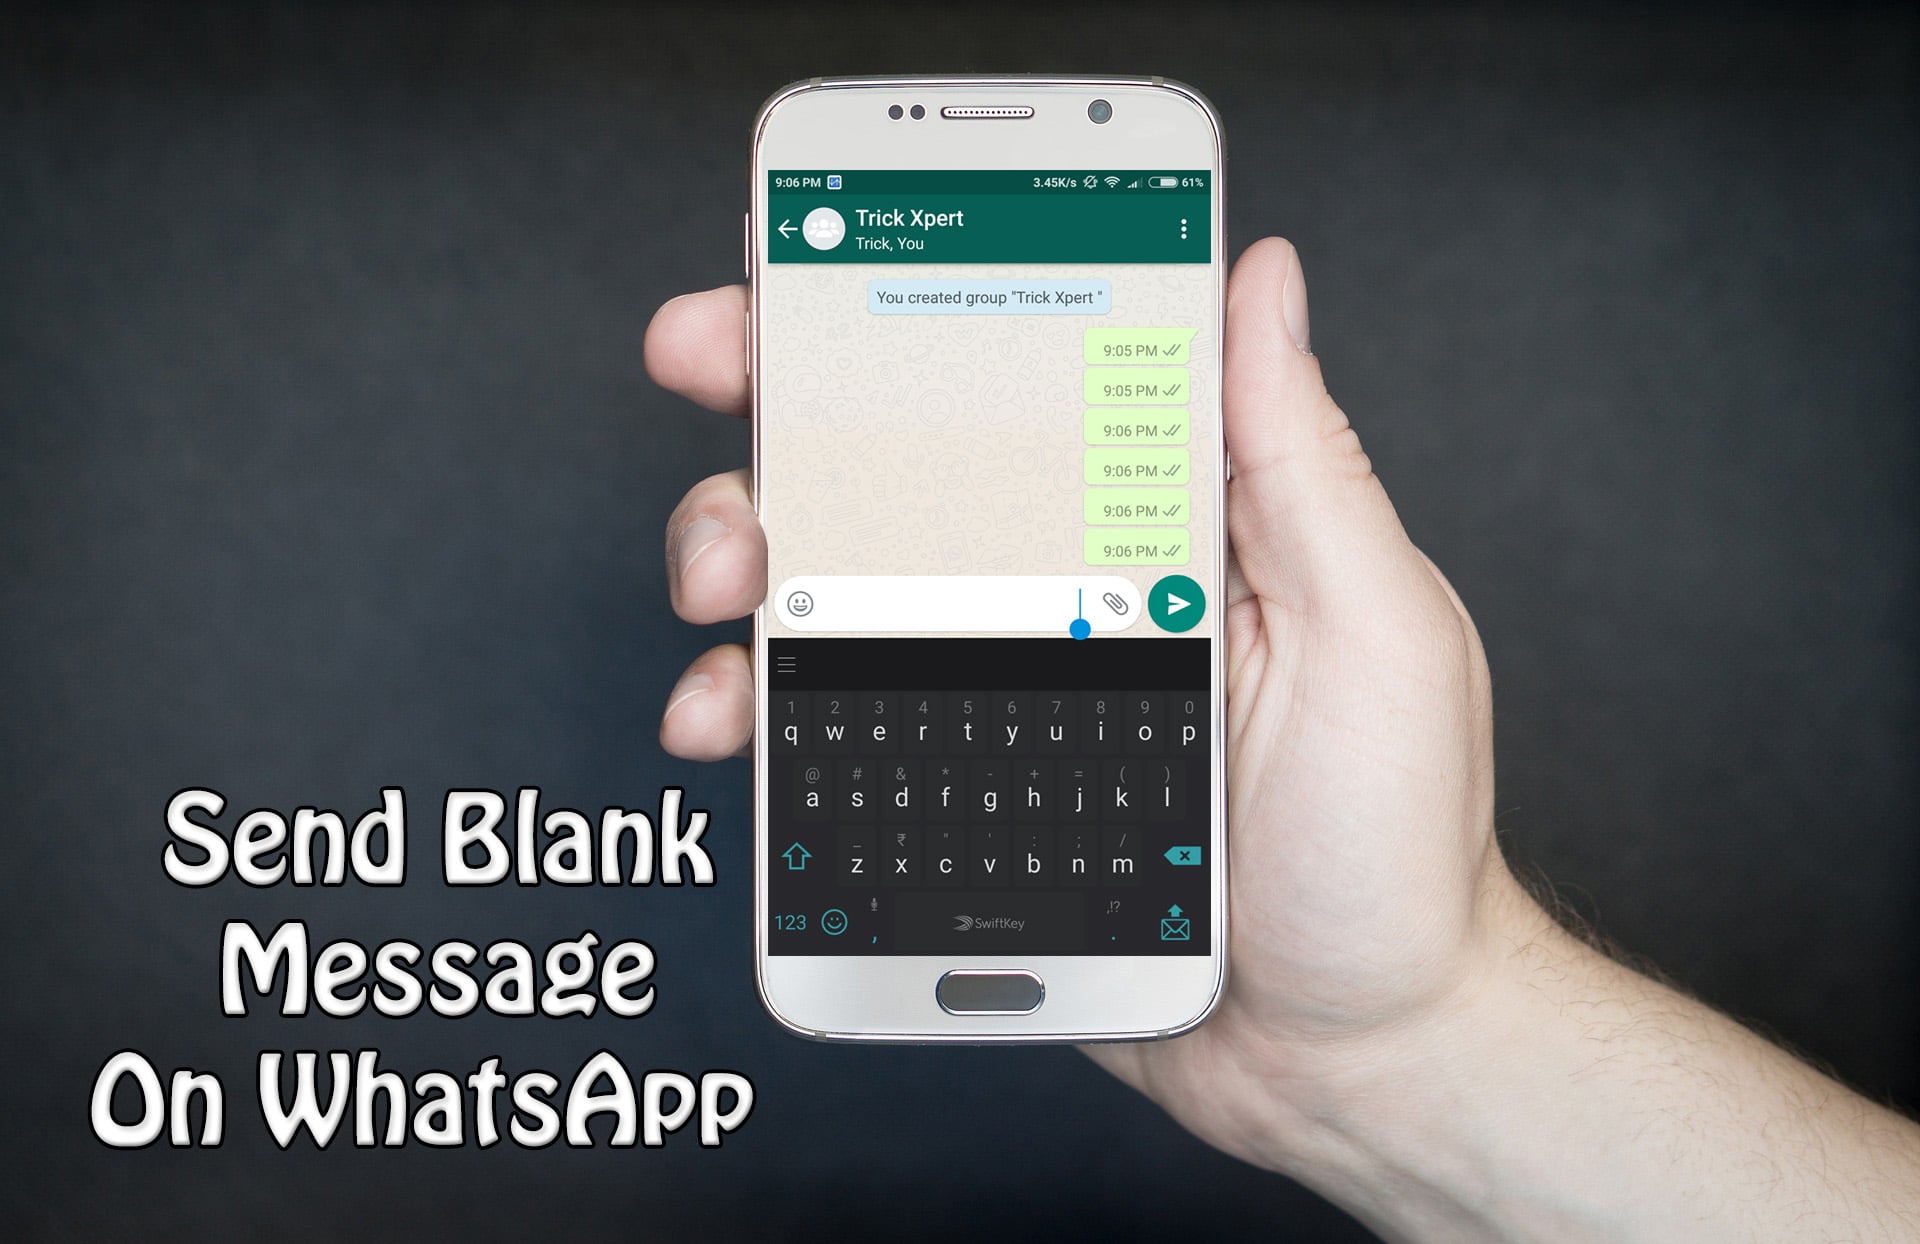 Send Blank Message On WhatsApp